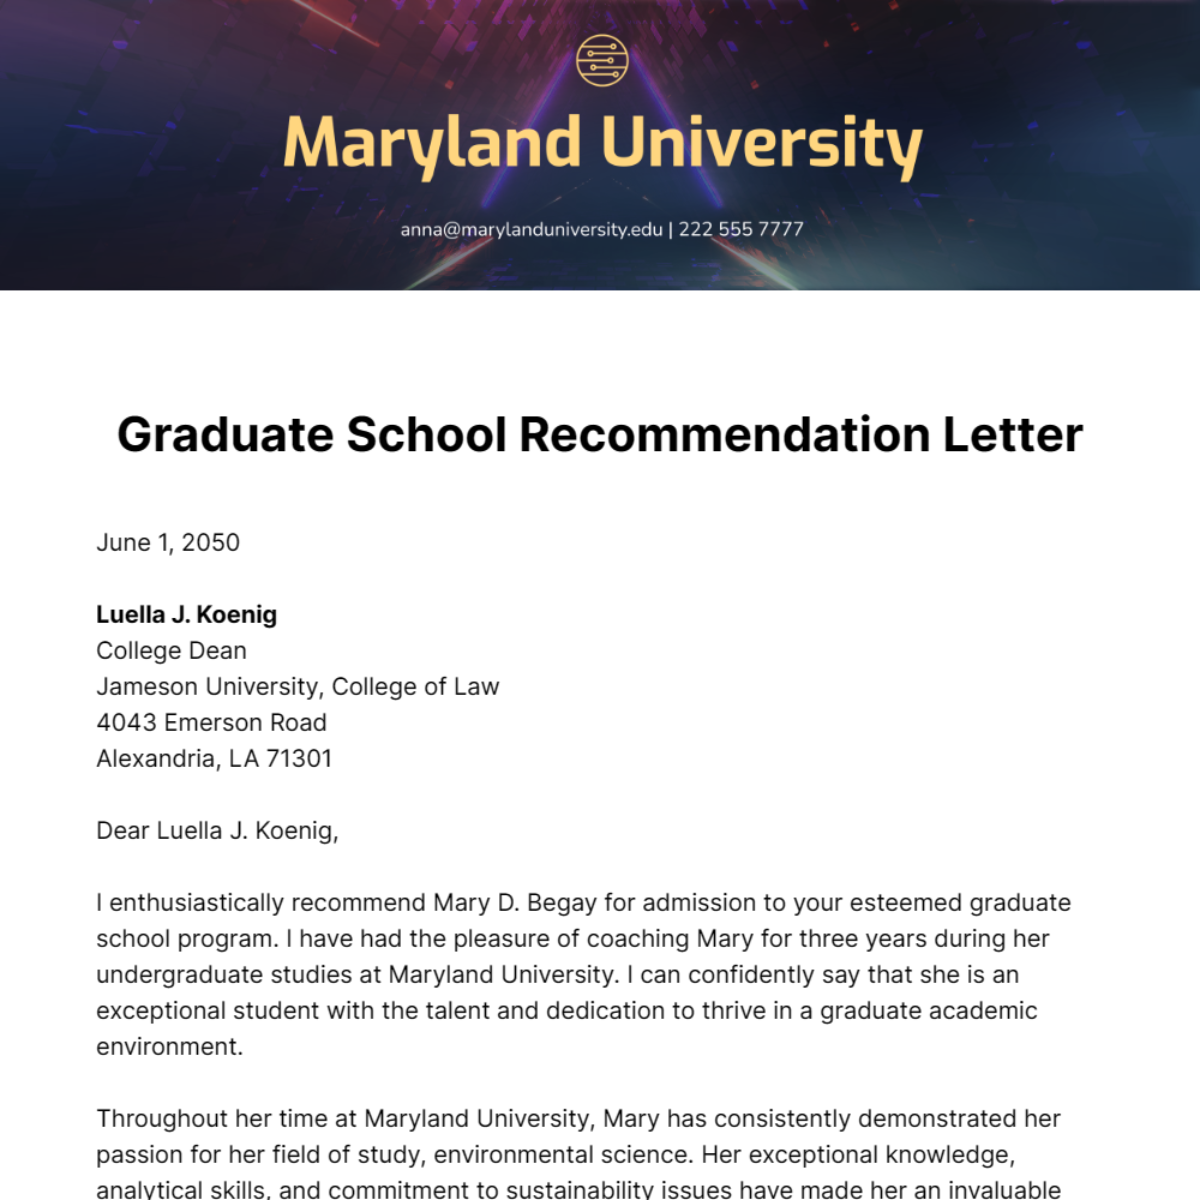 Graduate School Recommendation Letter Template